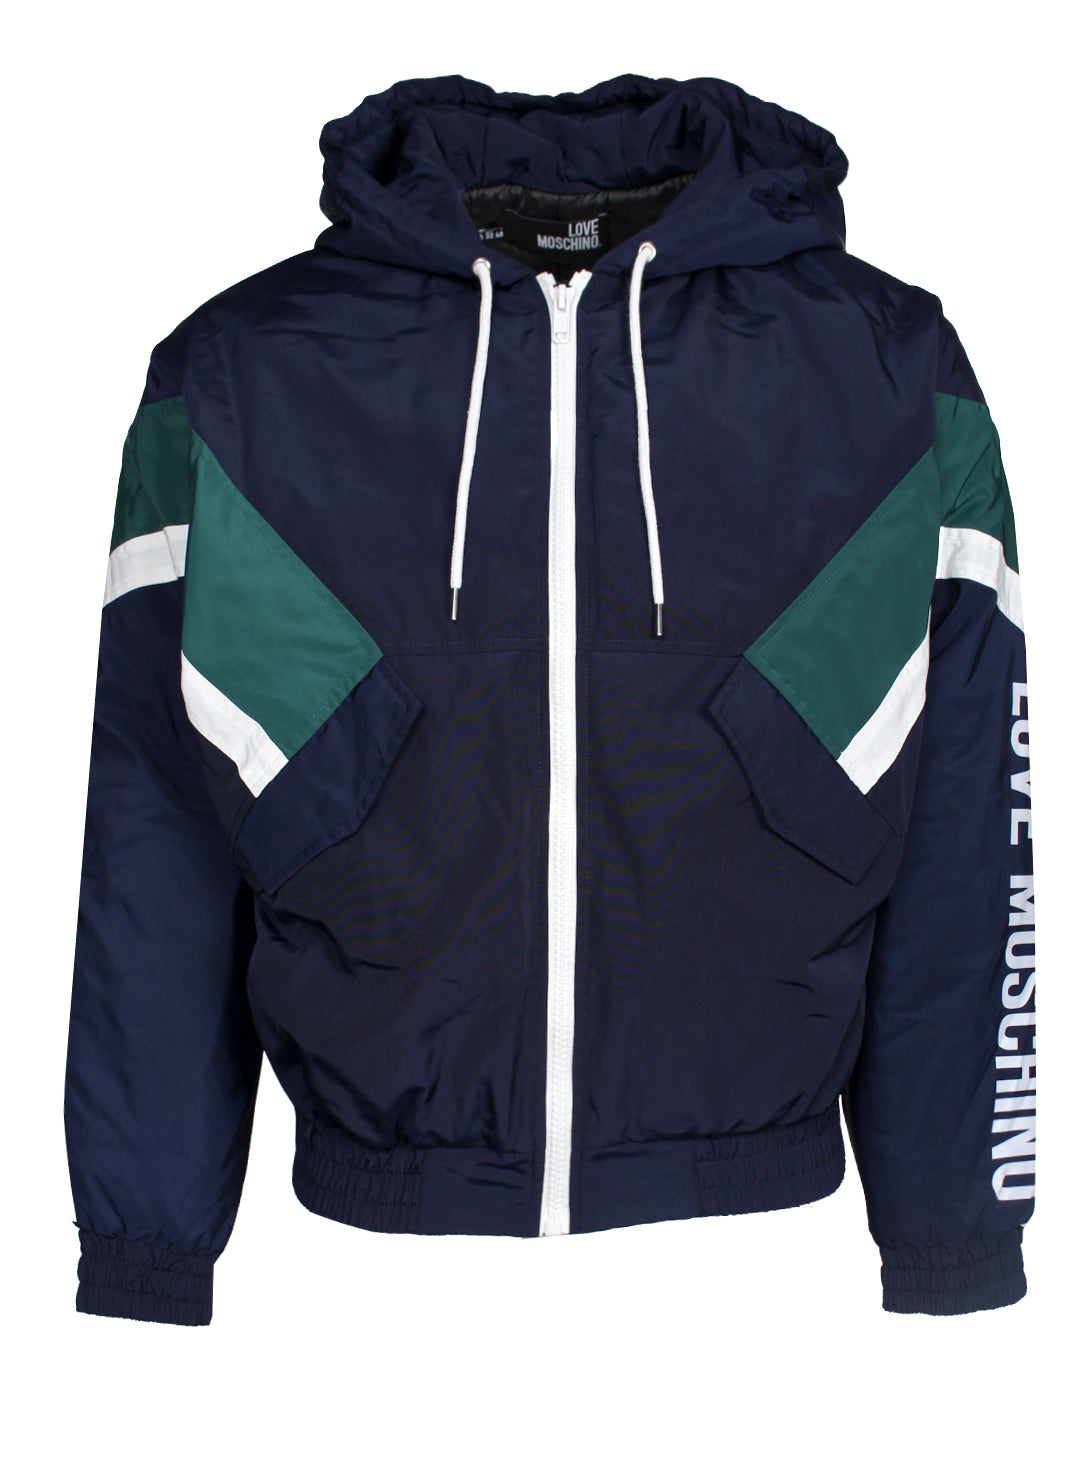 moschino track jacket